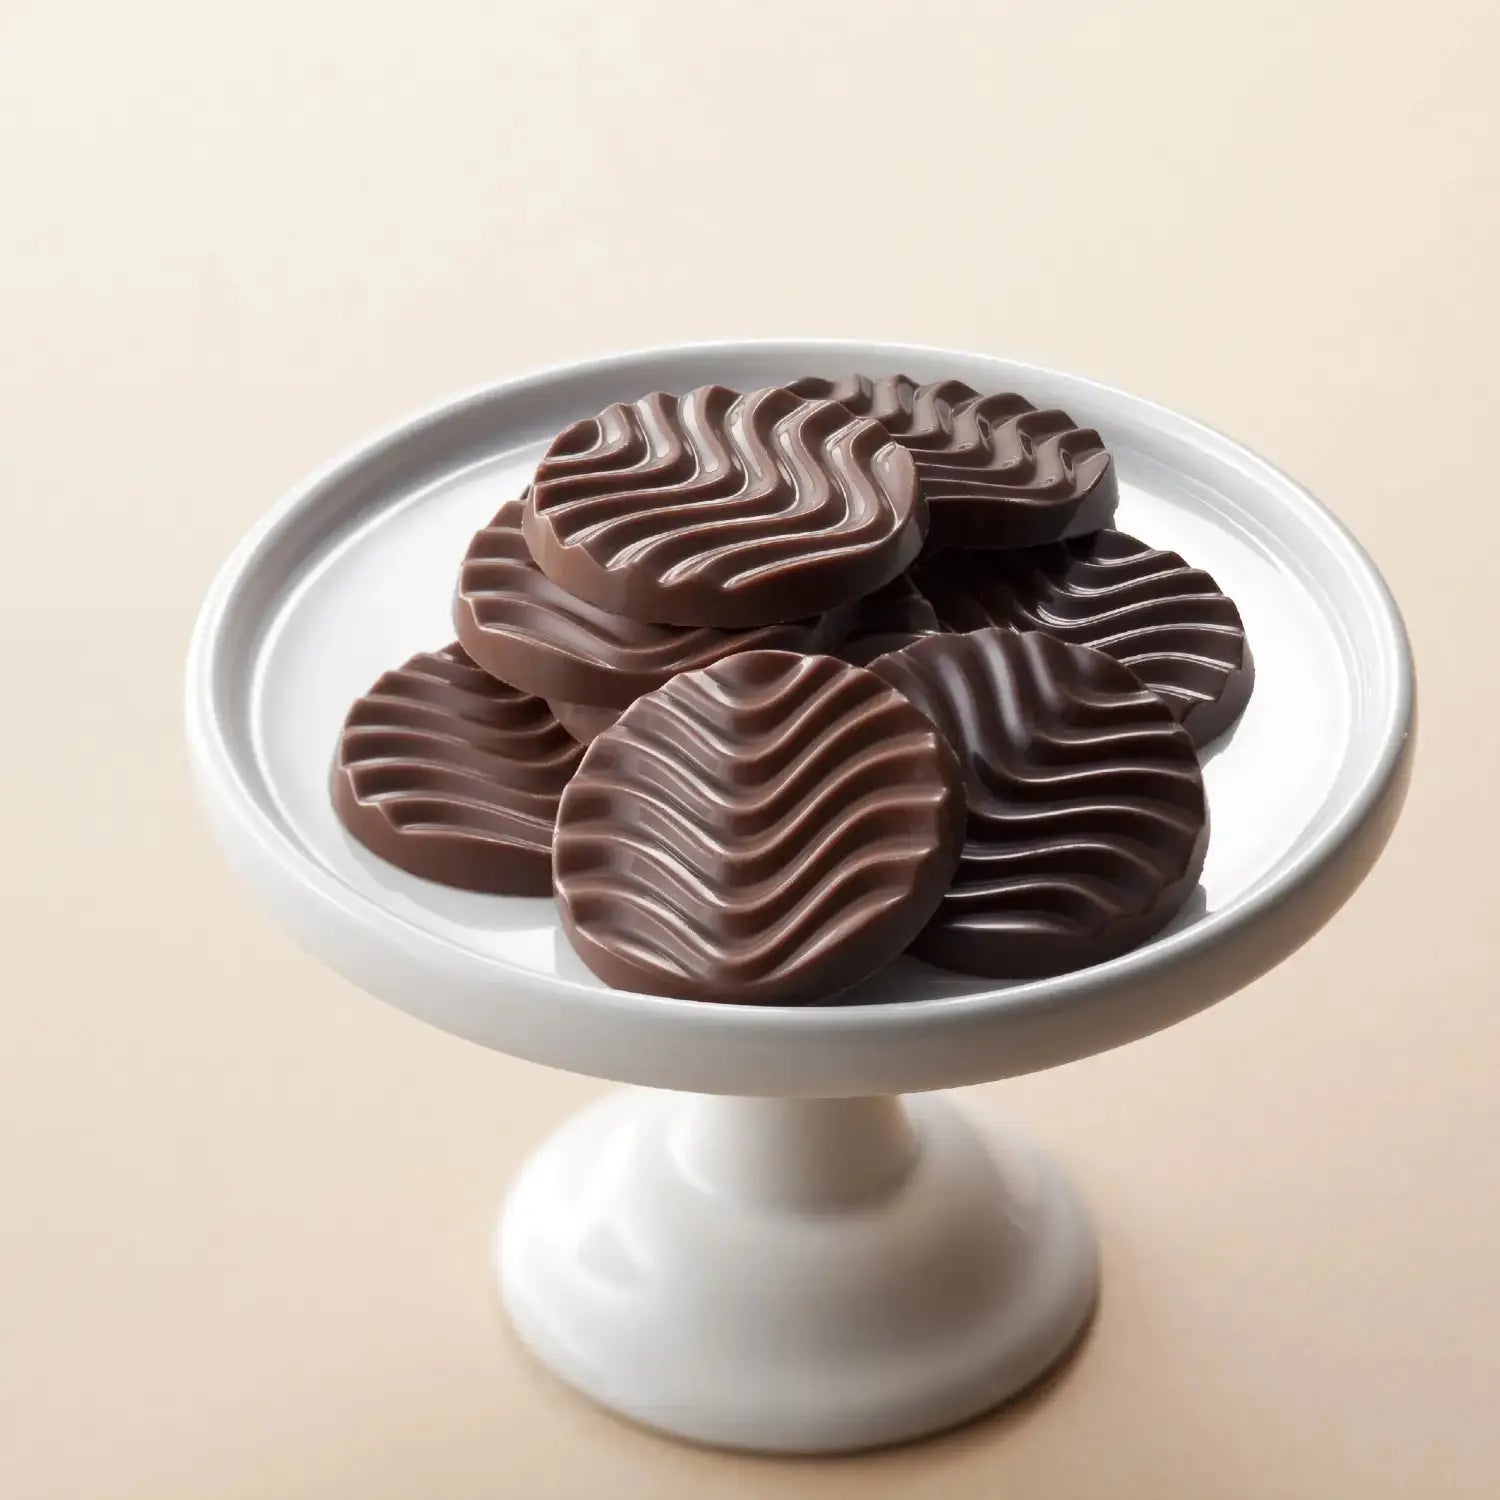 Pure Chocolate Sweet & Milk  Pure Milk Chocolate Online – ROYCE